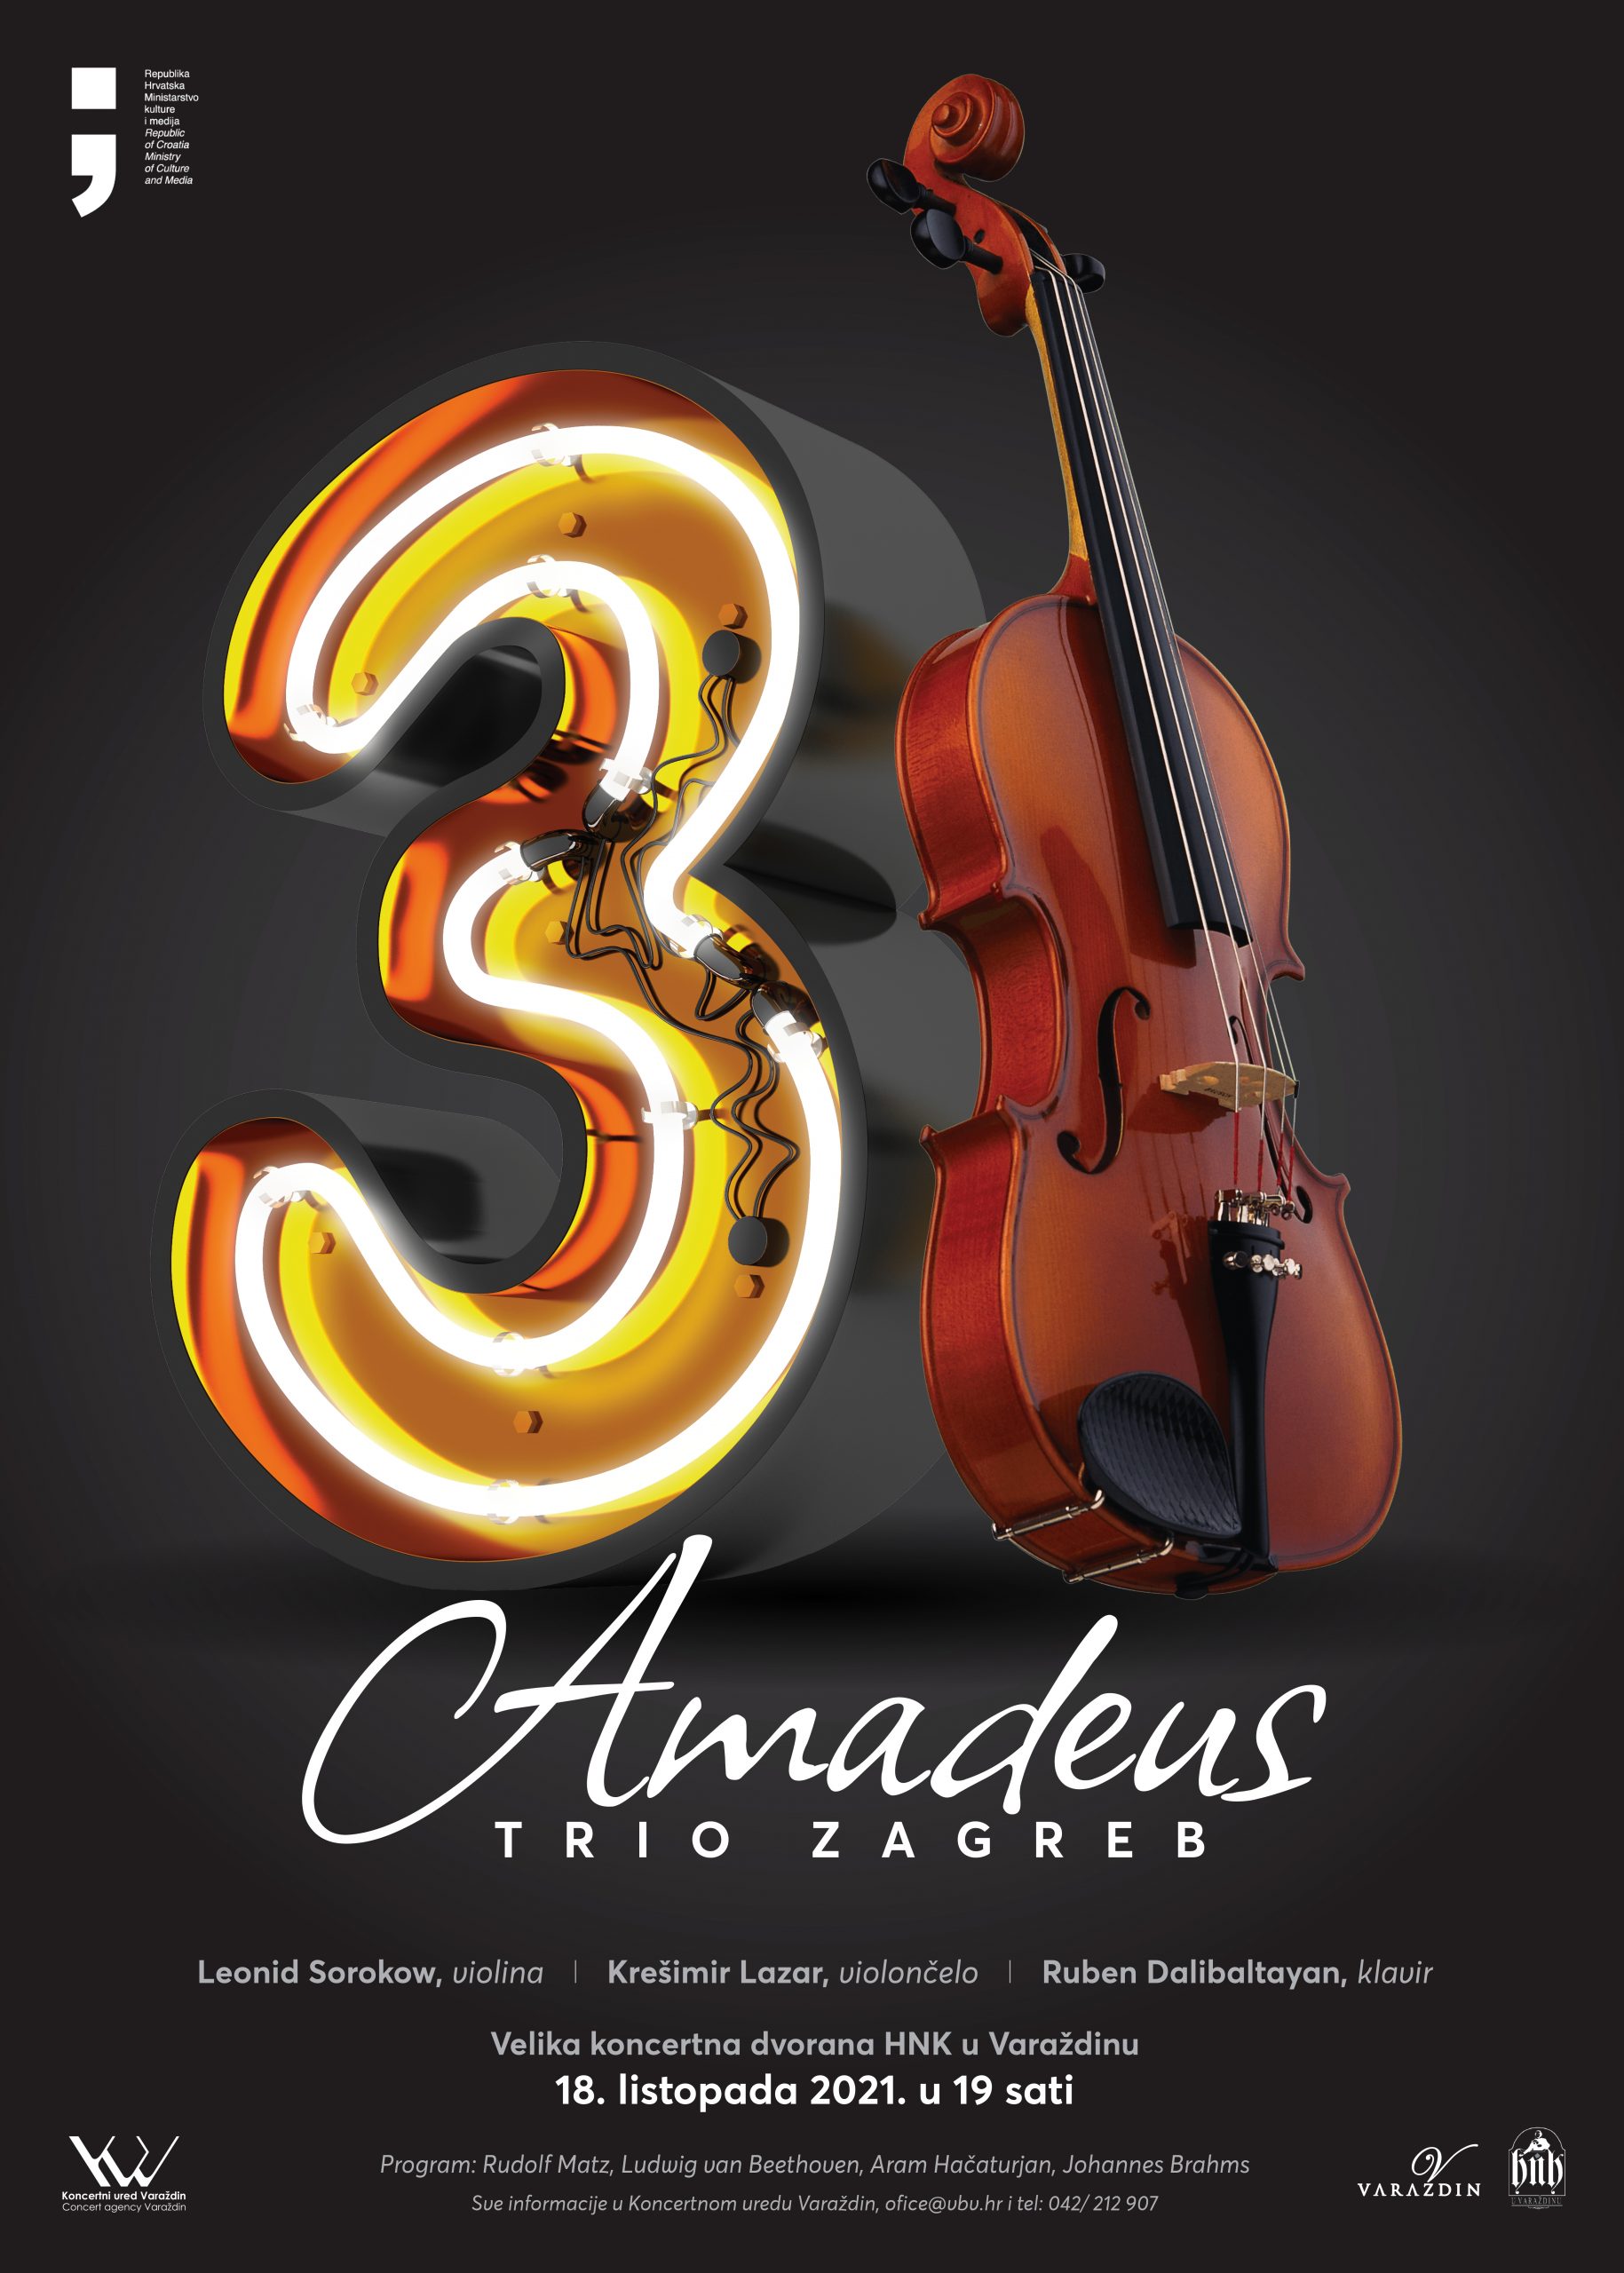 Amadeus trio Zagreb